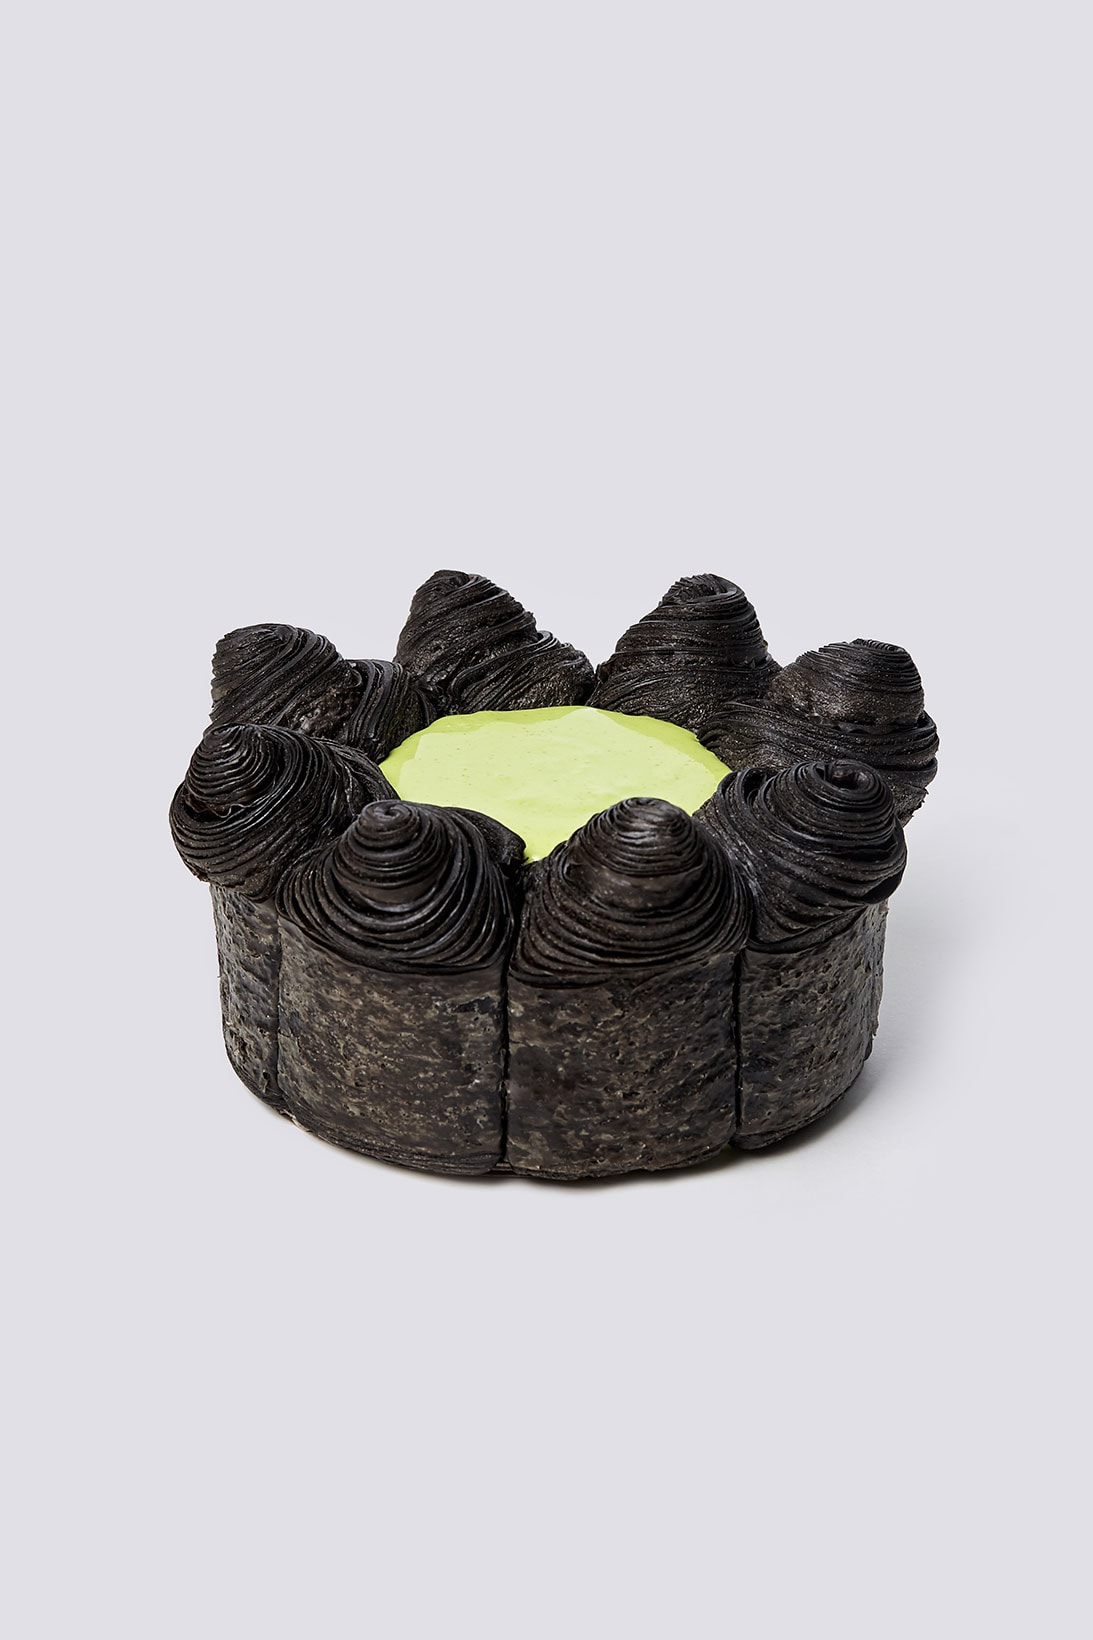 nudake gentle monster dessert brand seoul flagship cake peak matcha black croissant